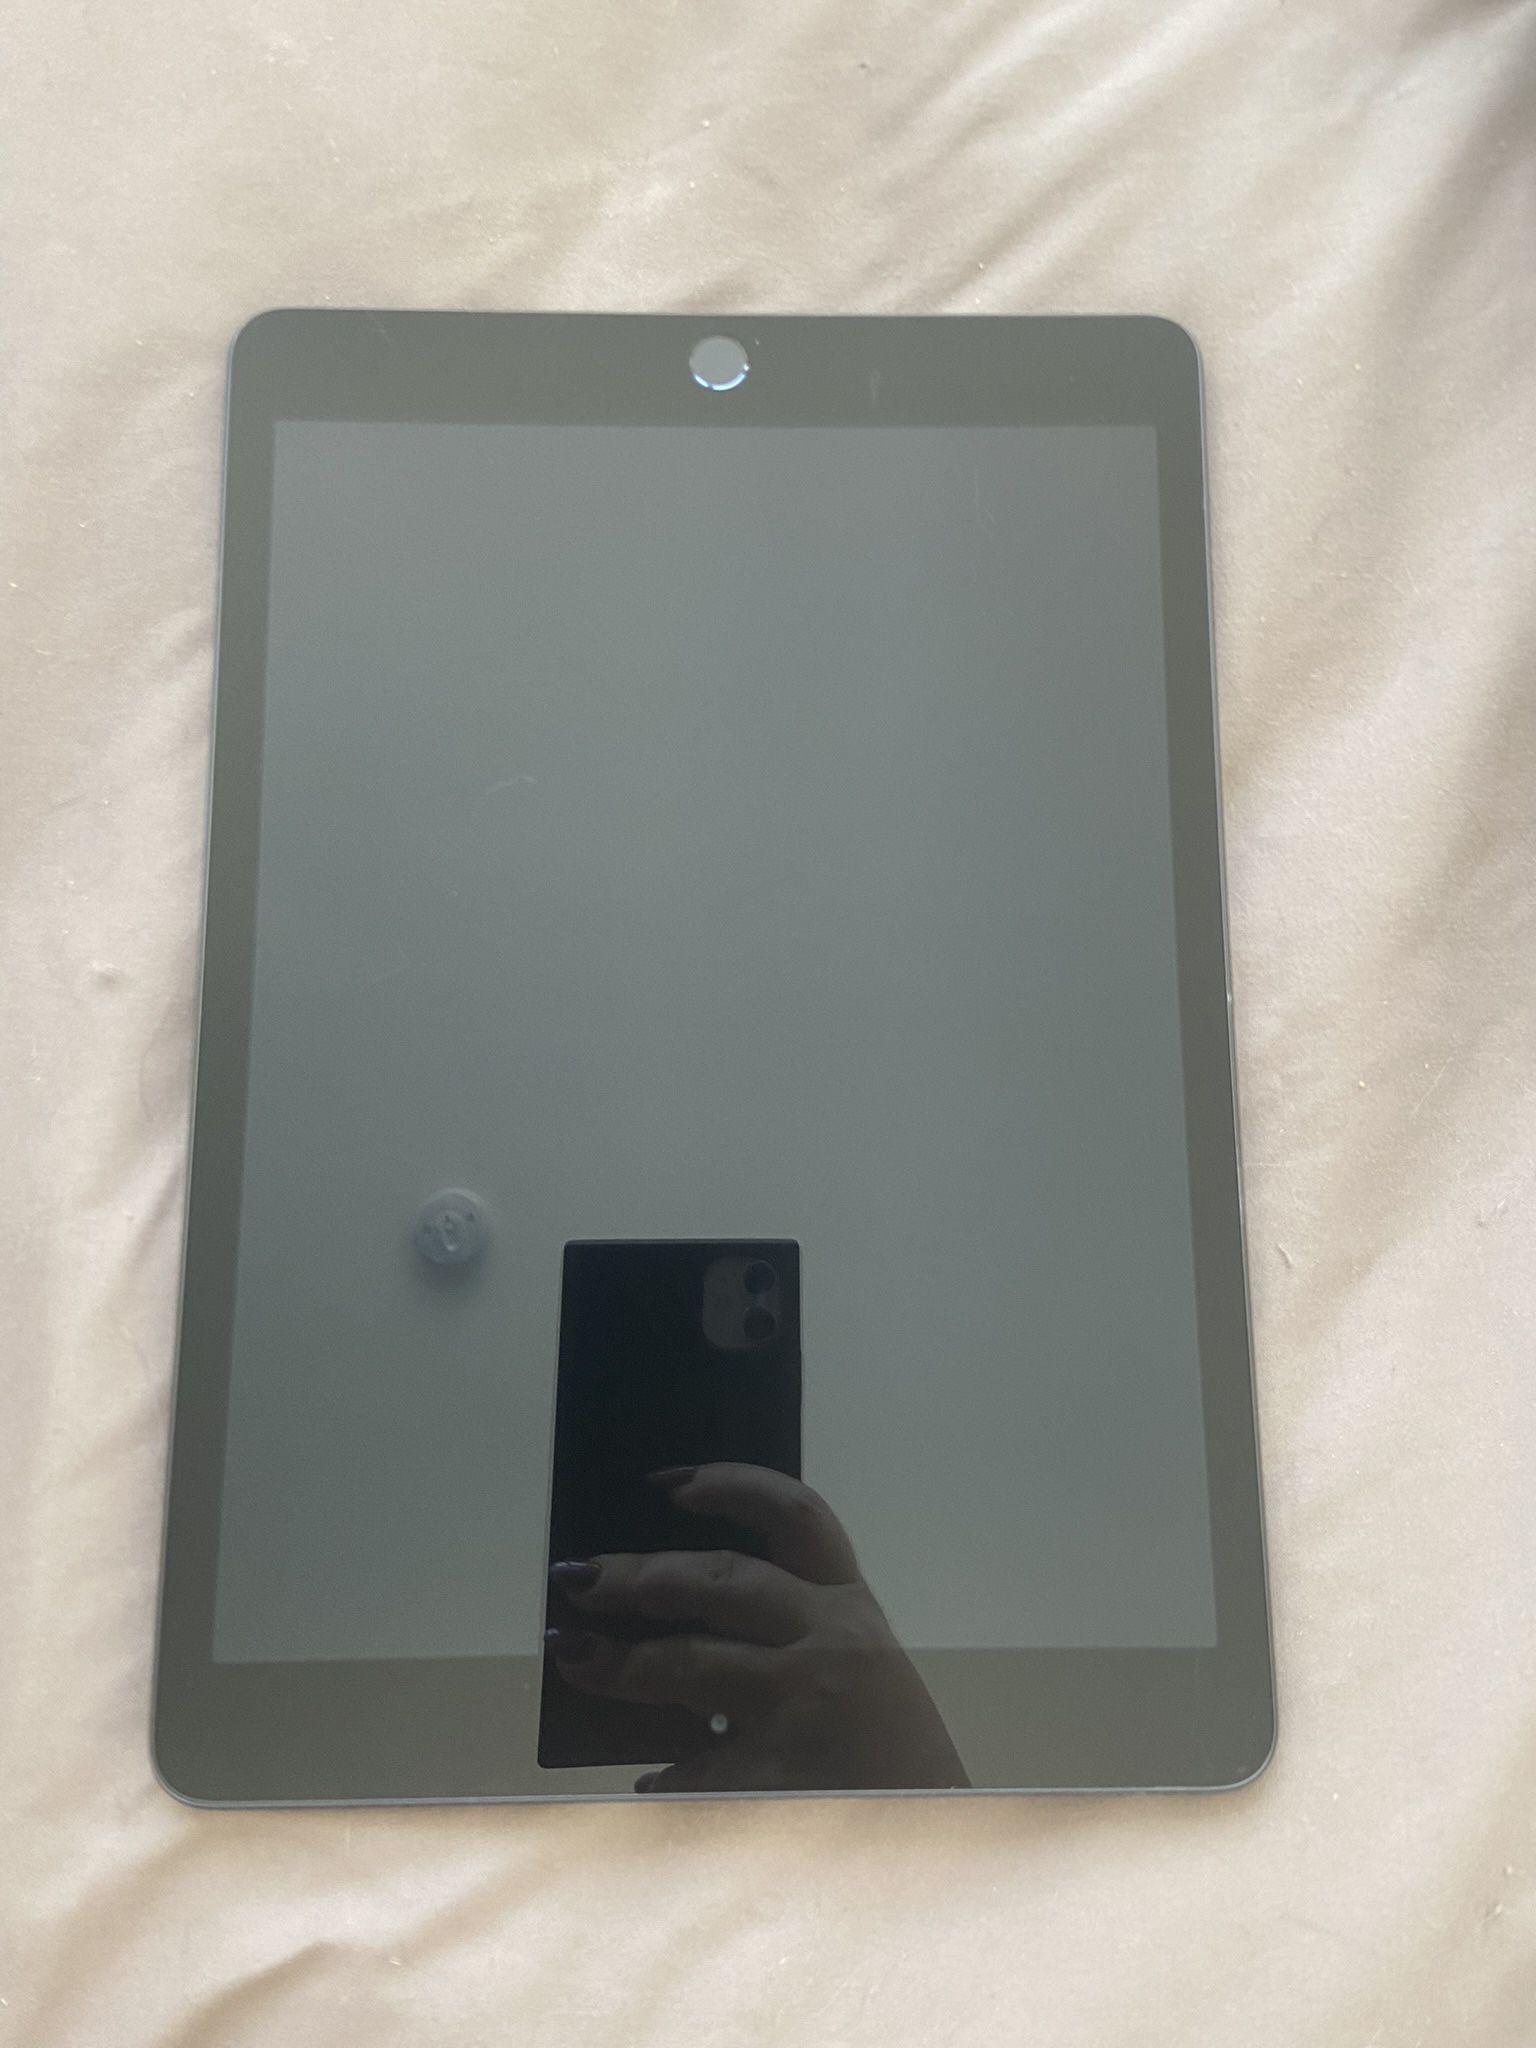 iPad 7th Generation- Perfect Condition